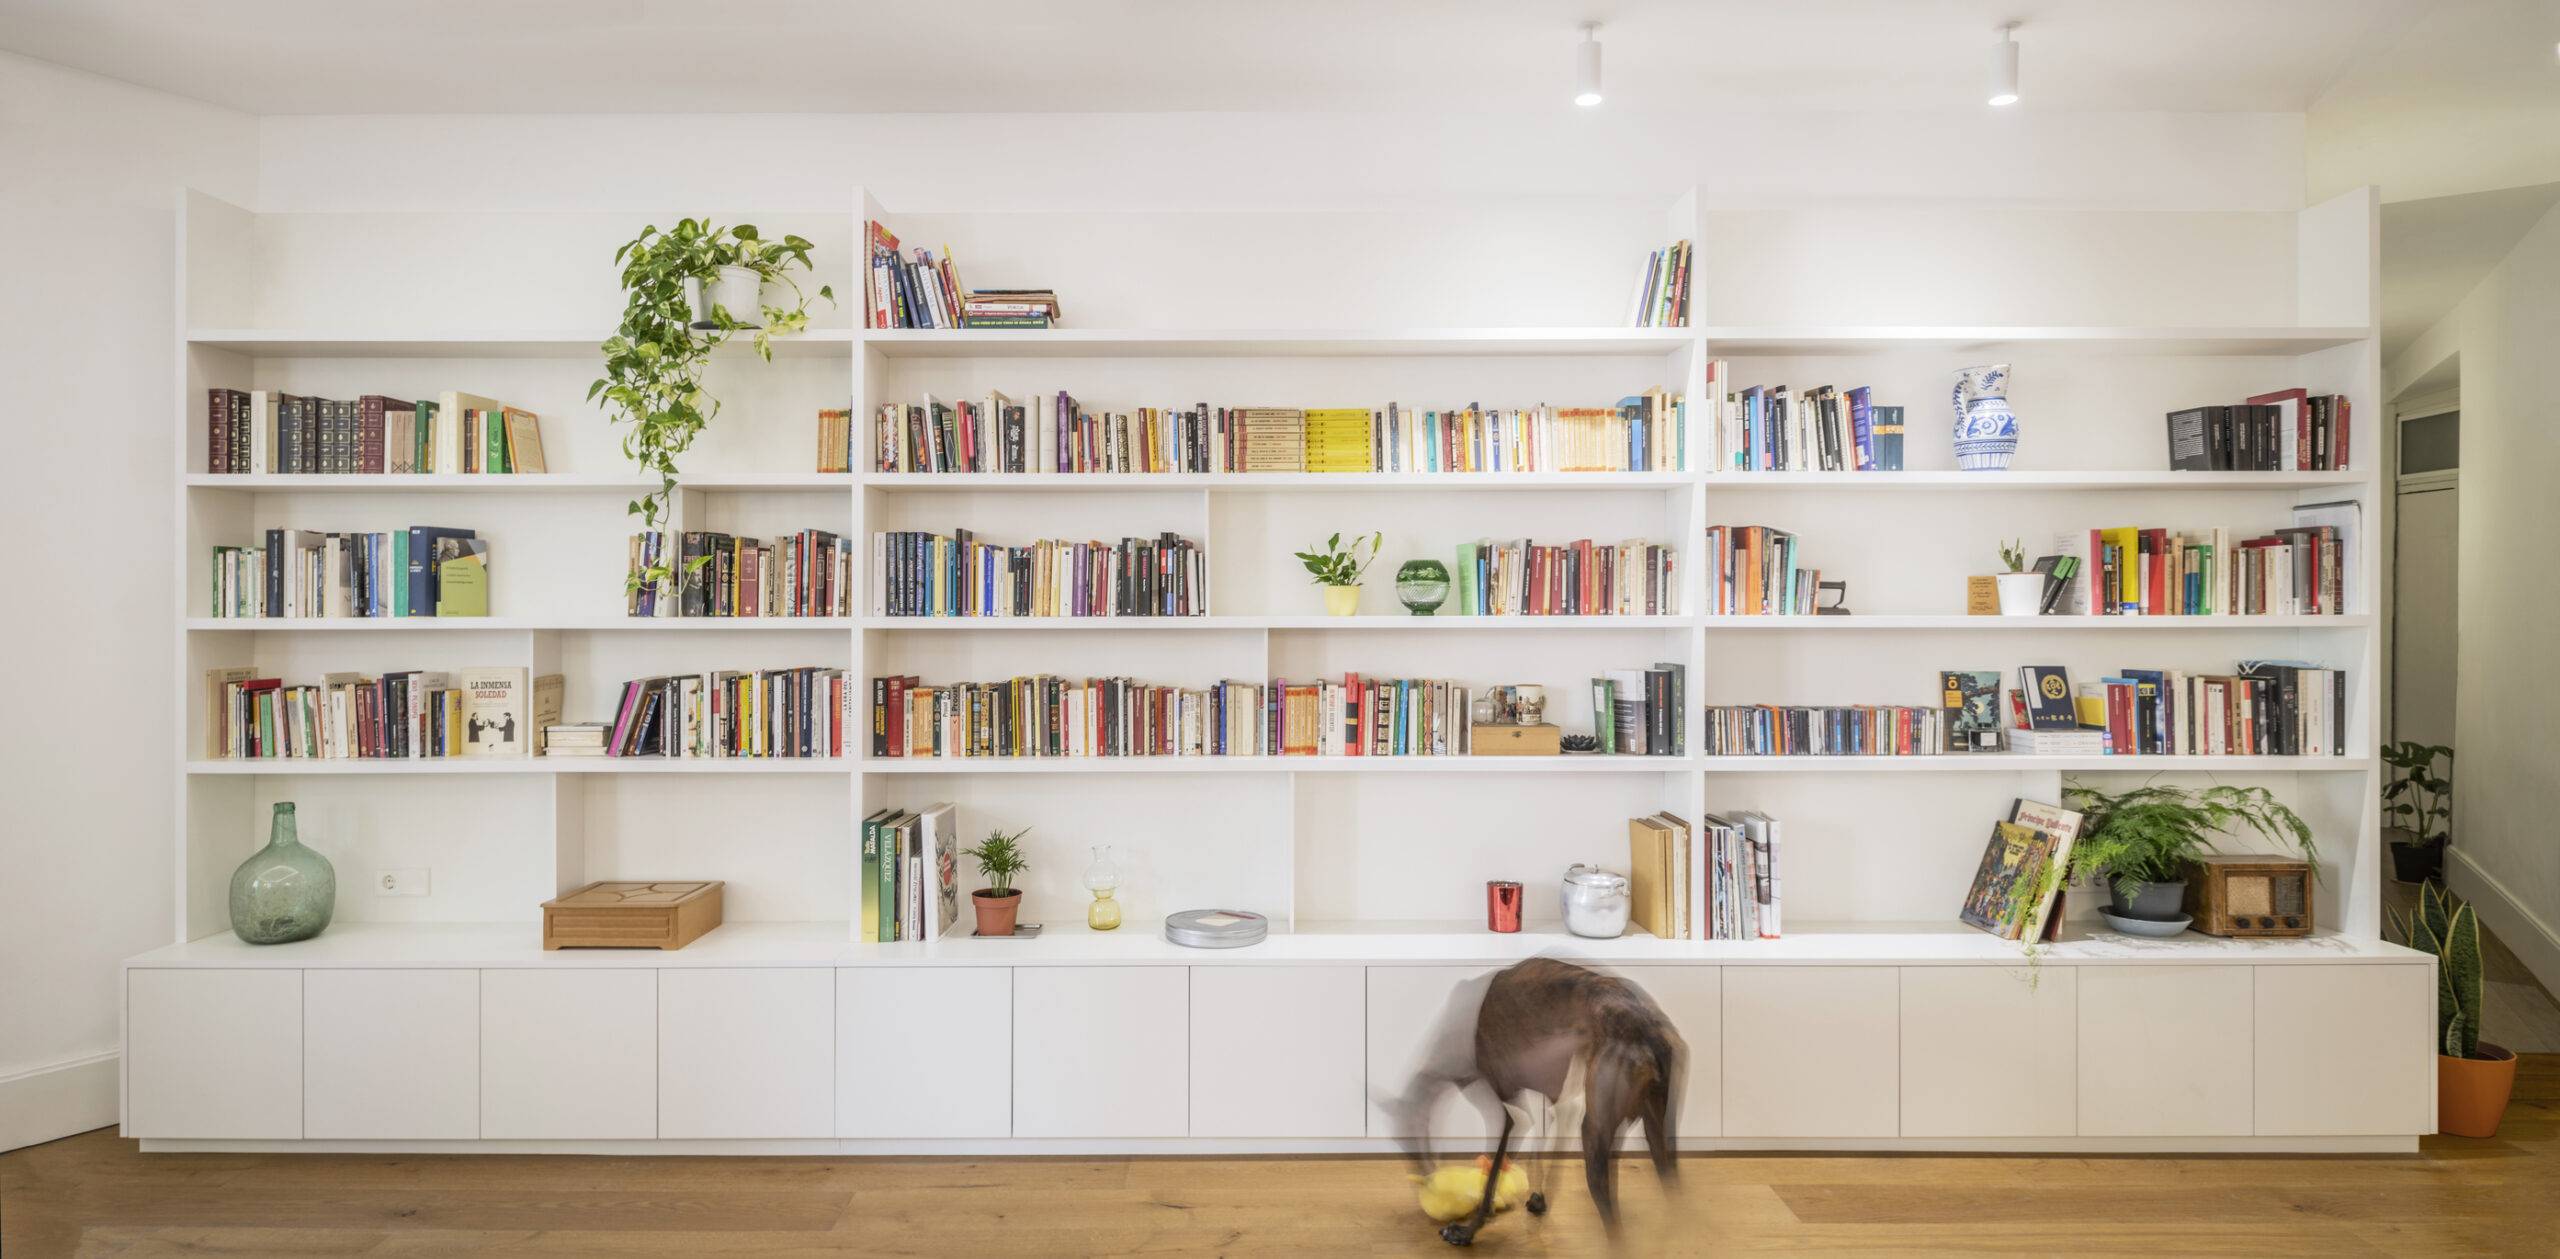 dog walking back wall to wall book shelves